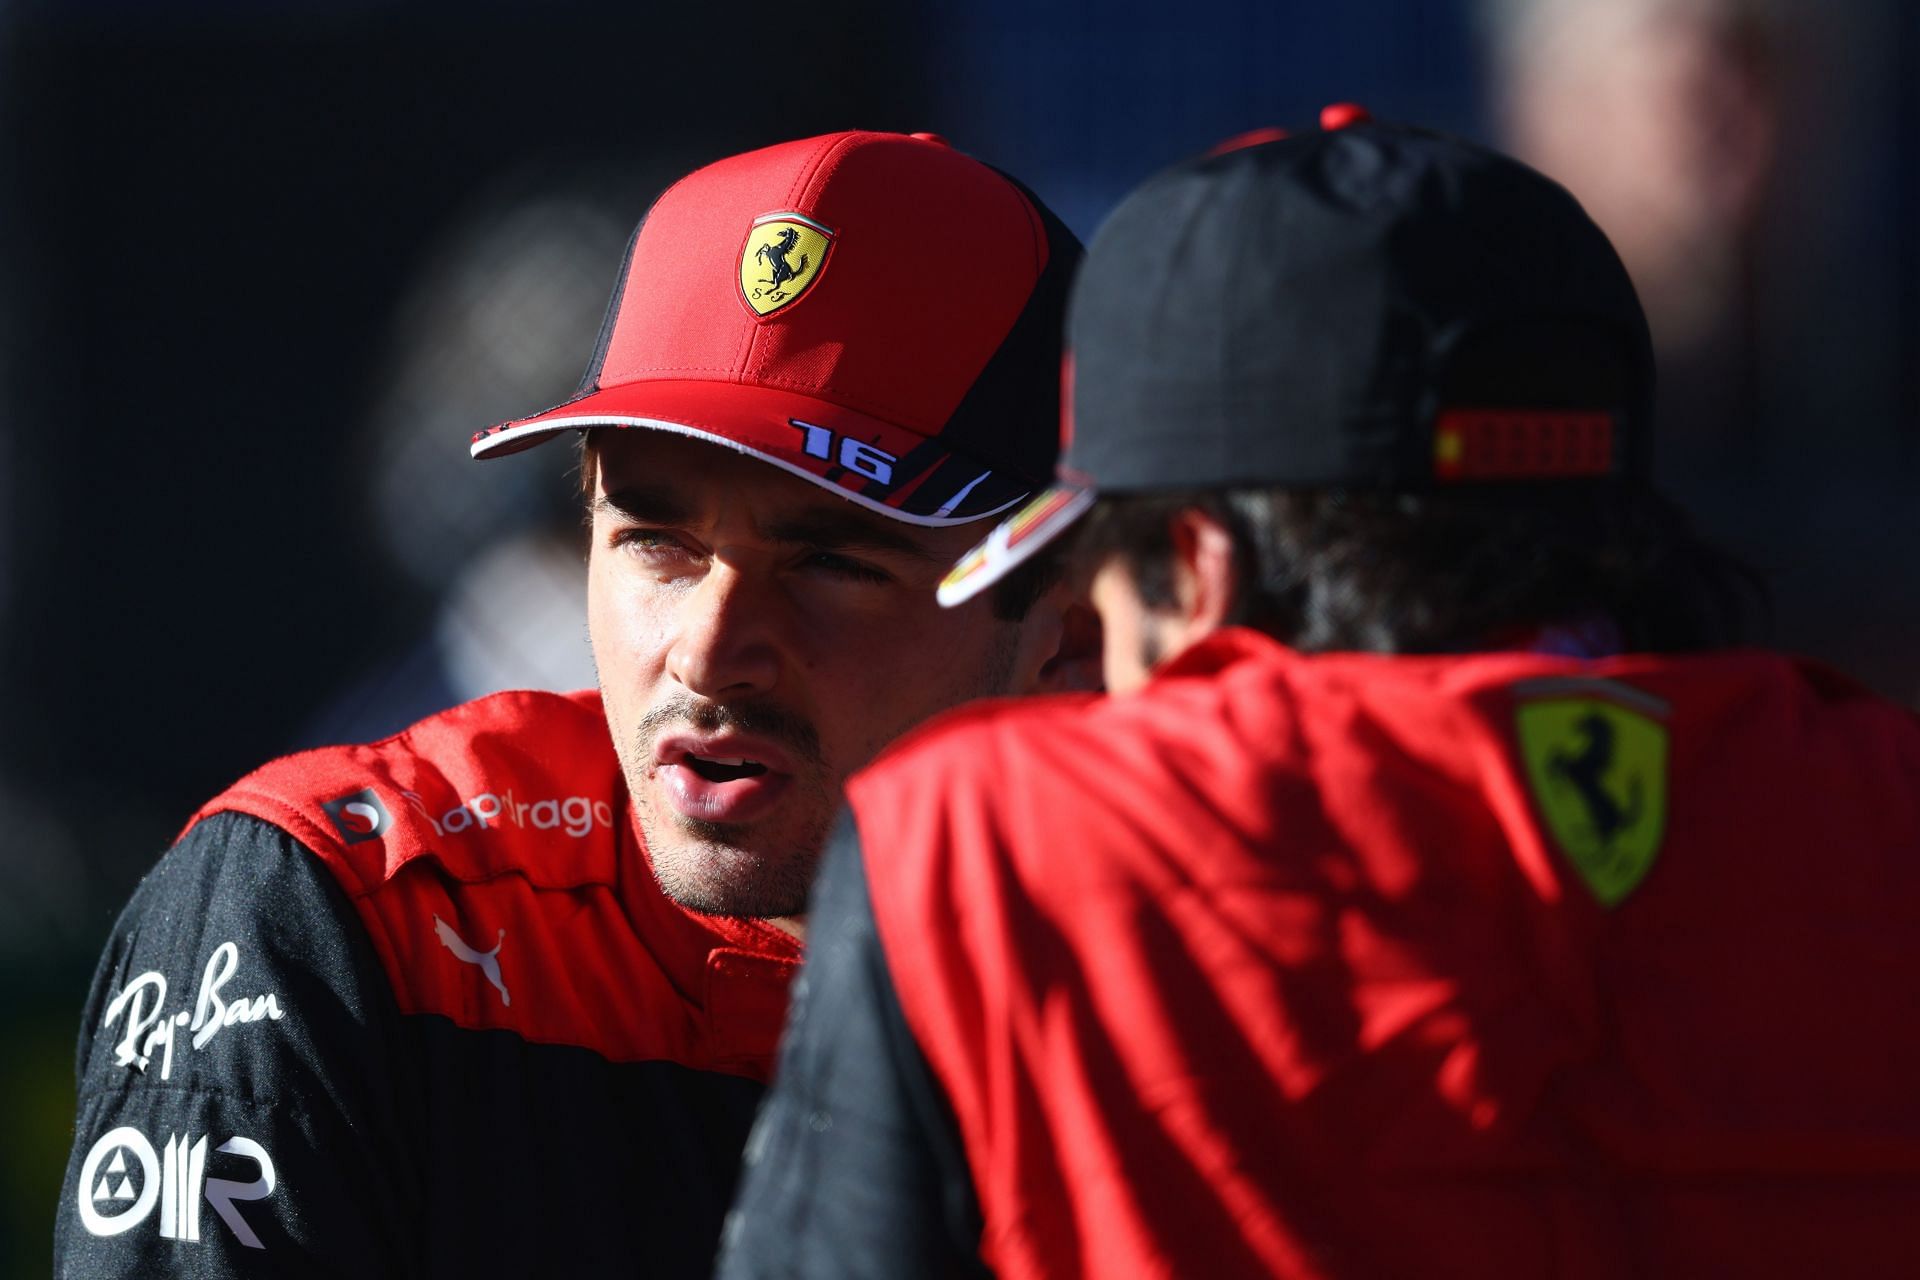 Ferrari cannot afford another failed driver partnership